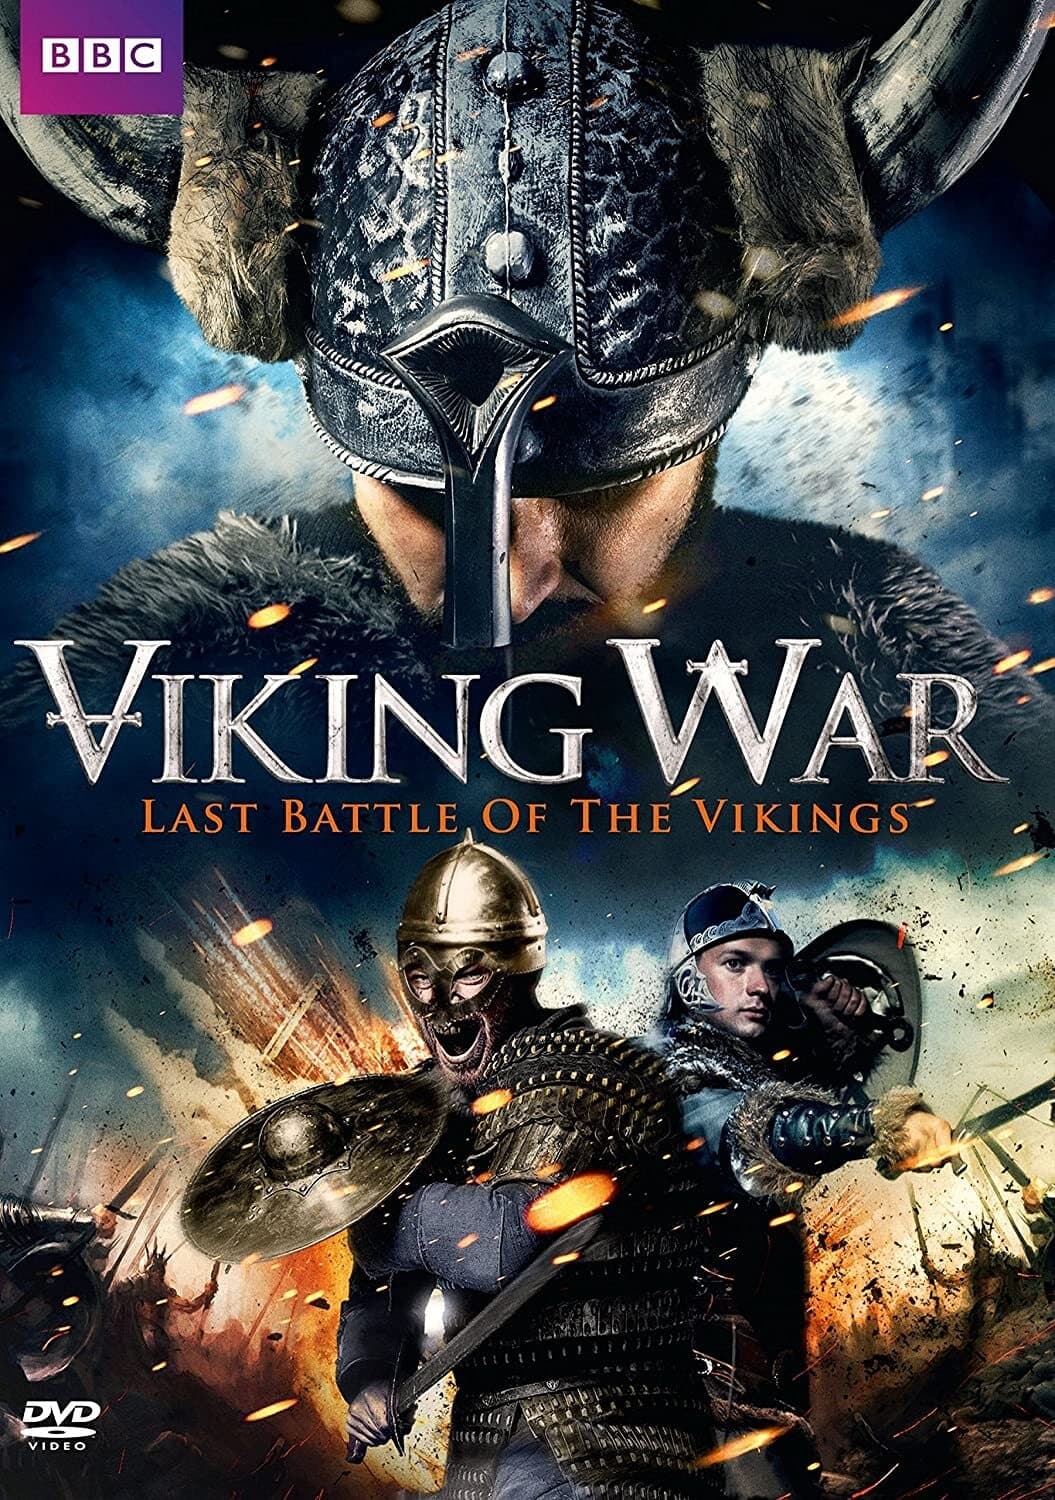 The Last Battle of the Vikings